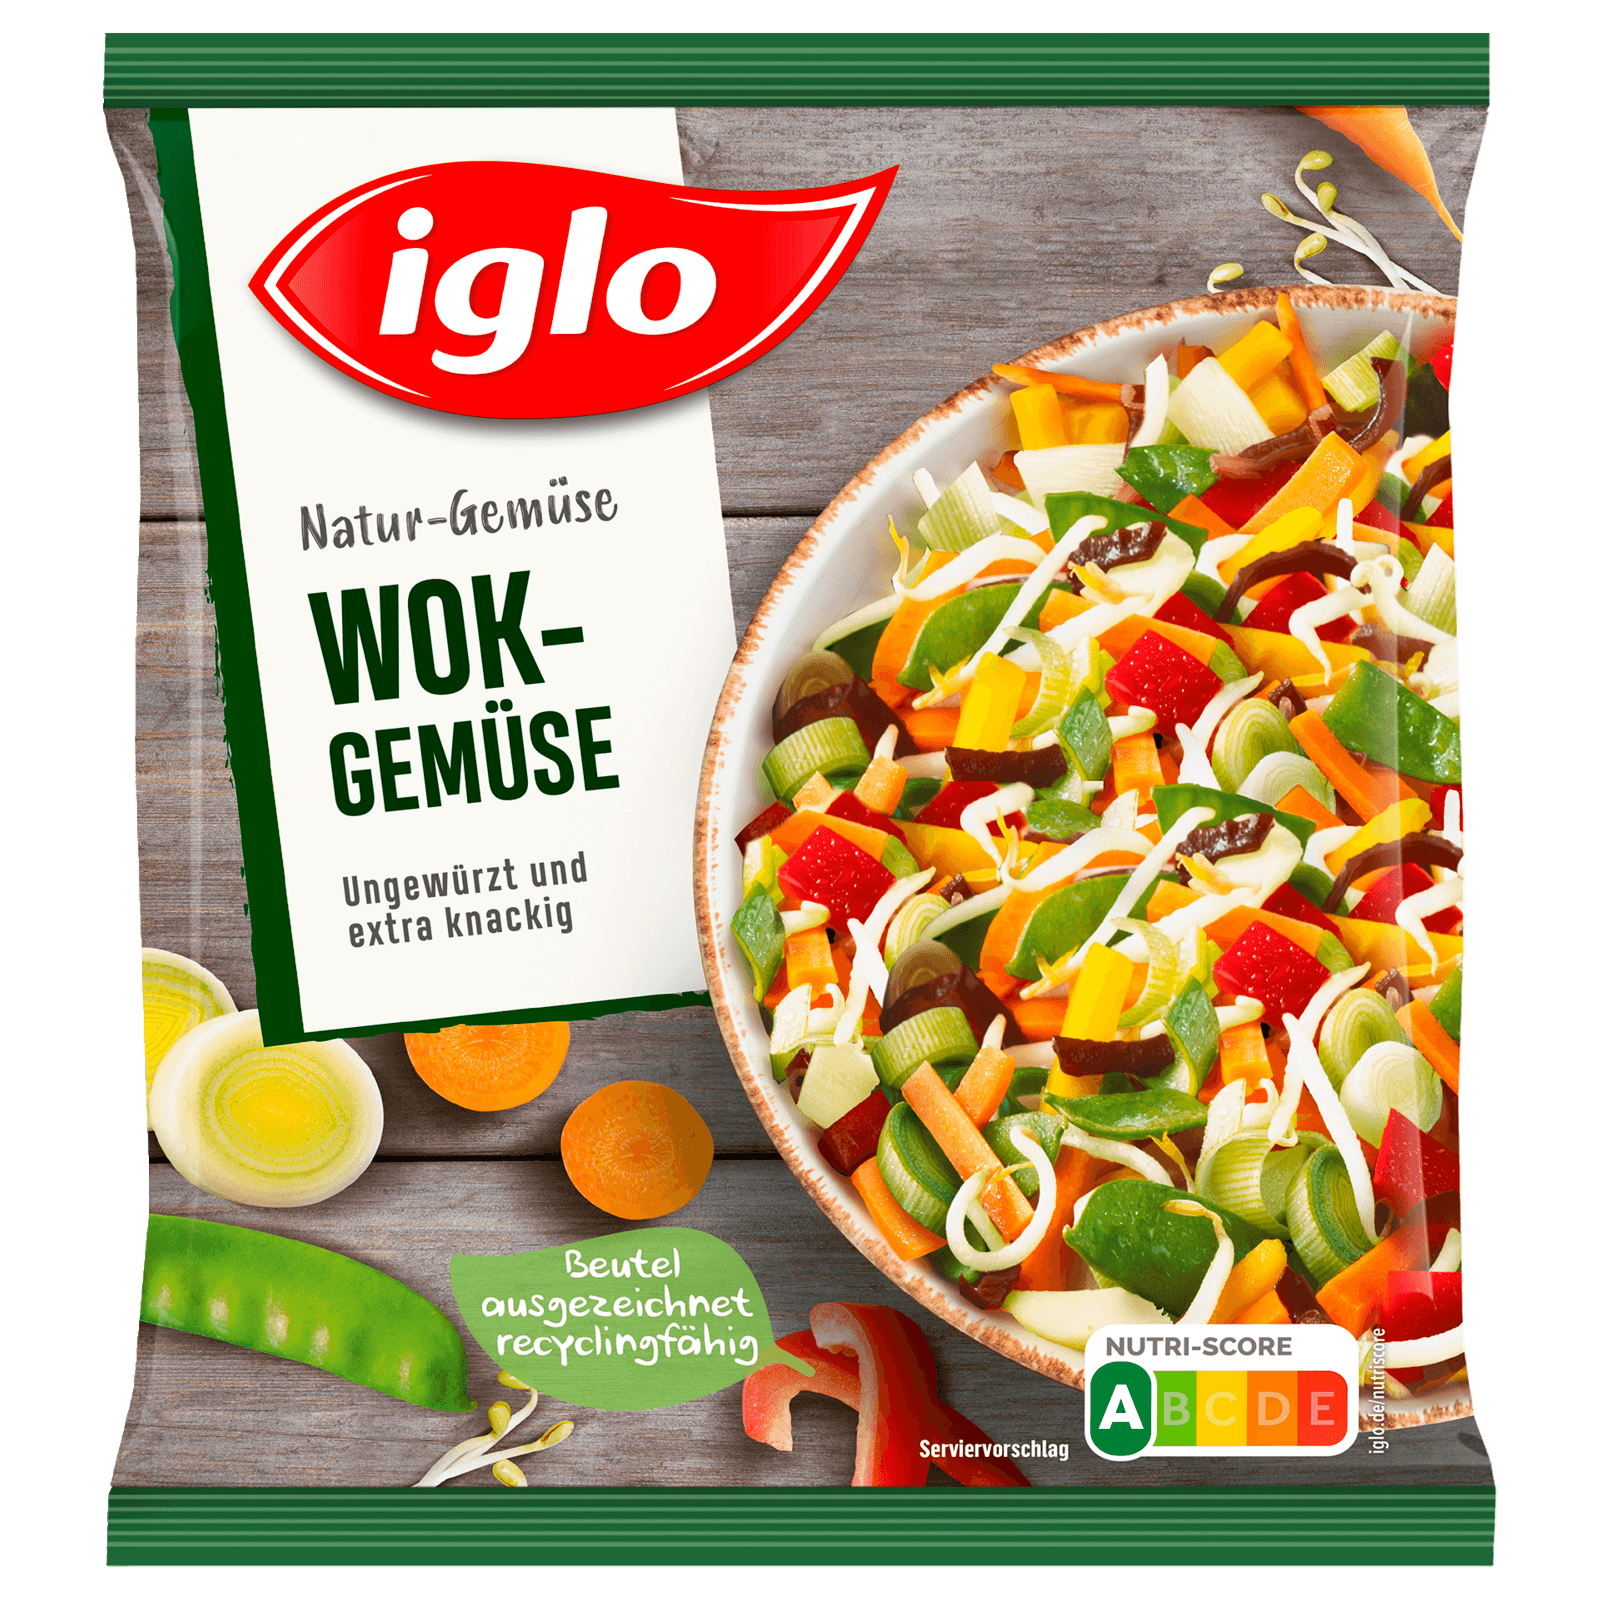 Stolpe Incubus uhyre Iglo Wok-Gemüse 700g bei REWE online bestellen! REWE.de